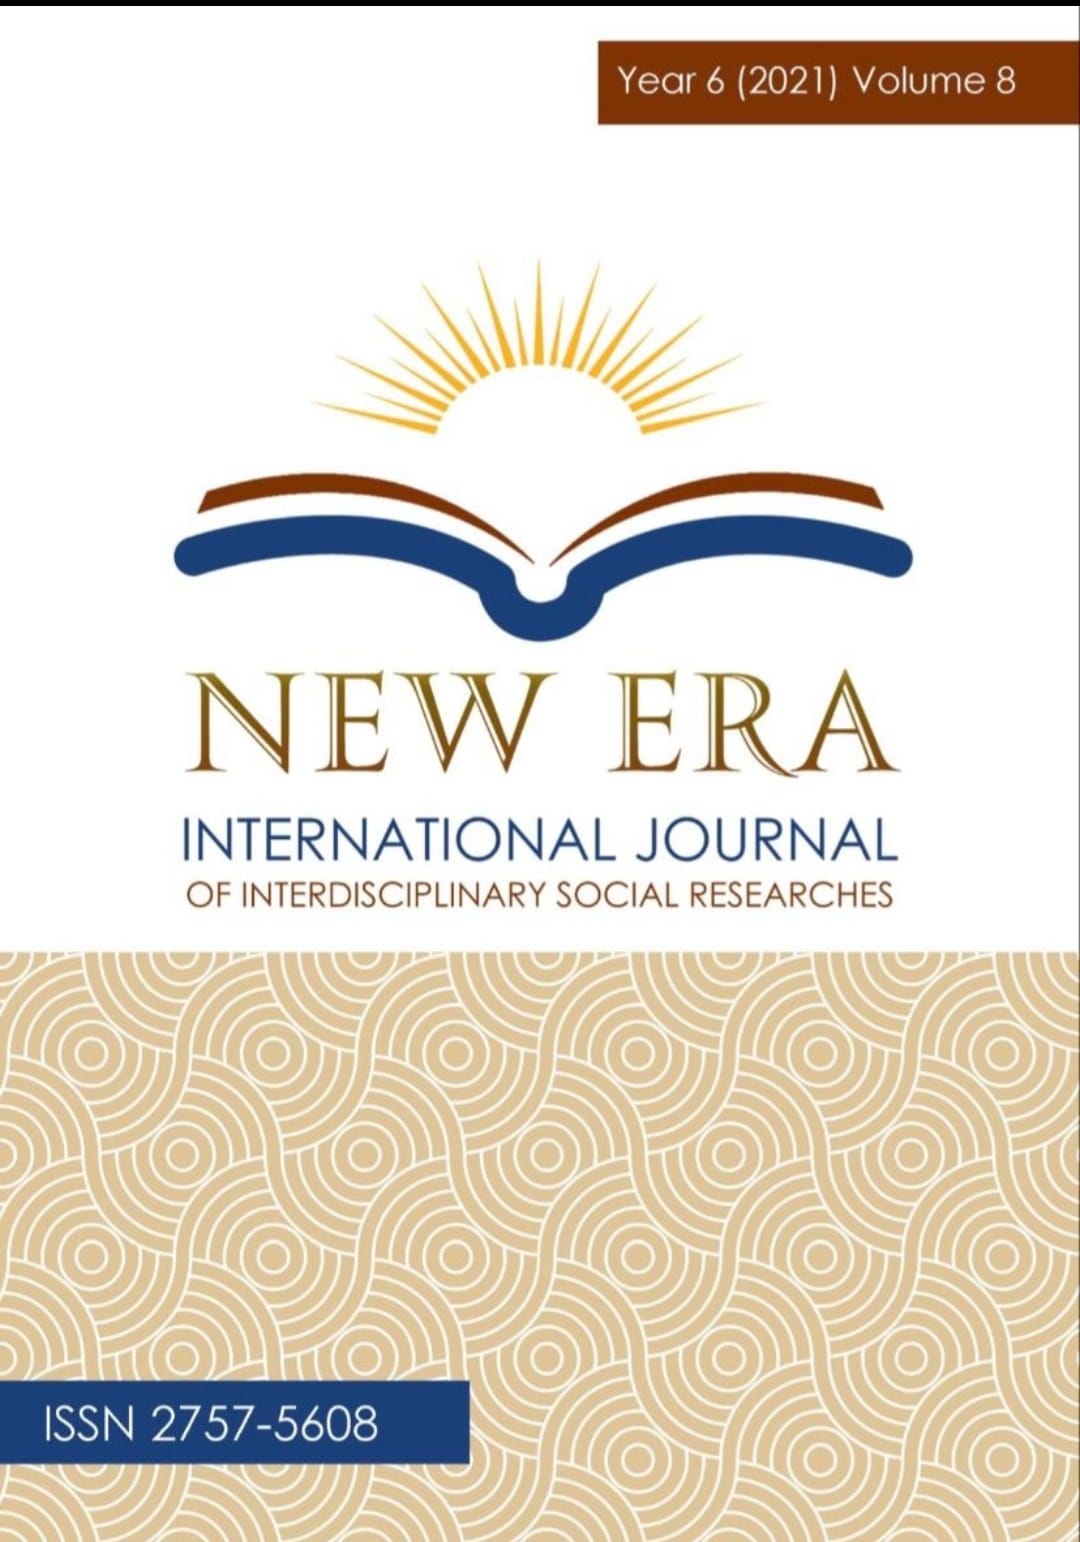 					View Vol. 6 No. 8 (2021): NEW ERA INTERNATIONAL JOURNAL OF INTERDISCIPLINARY SOCIAL RESEARCHES
				